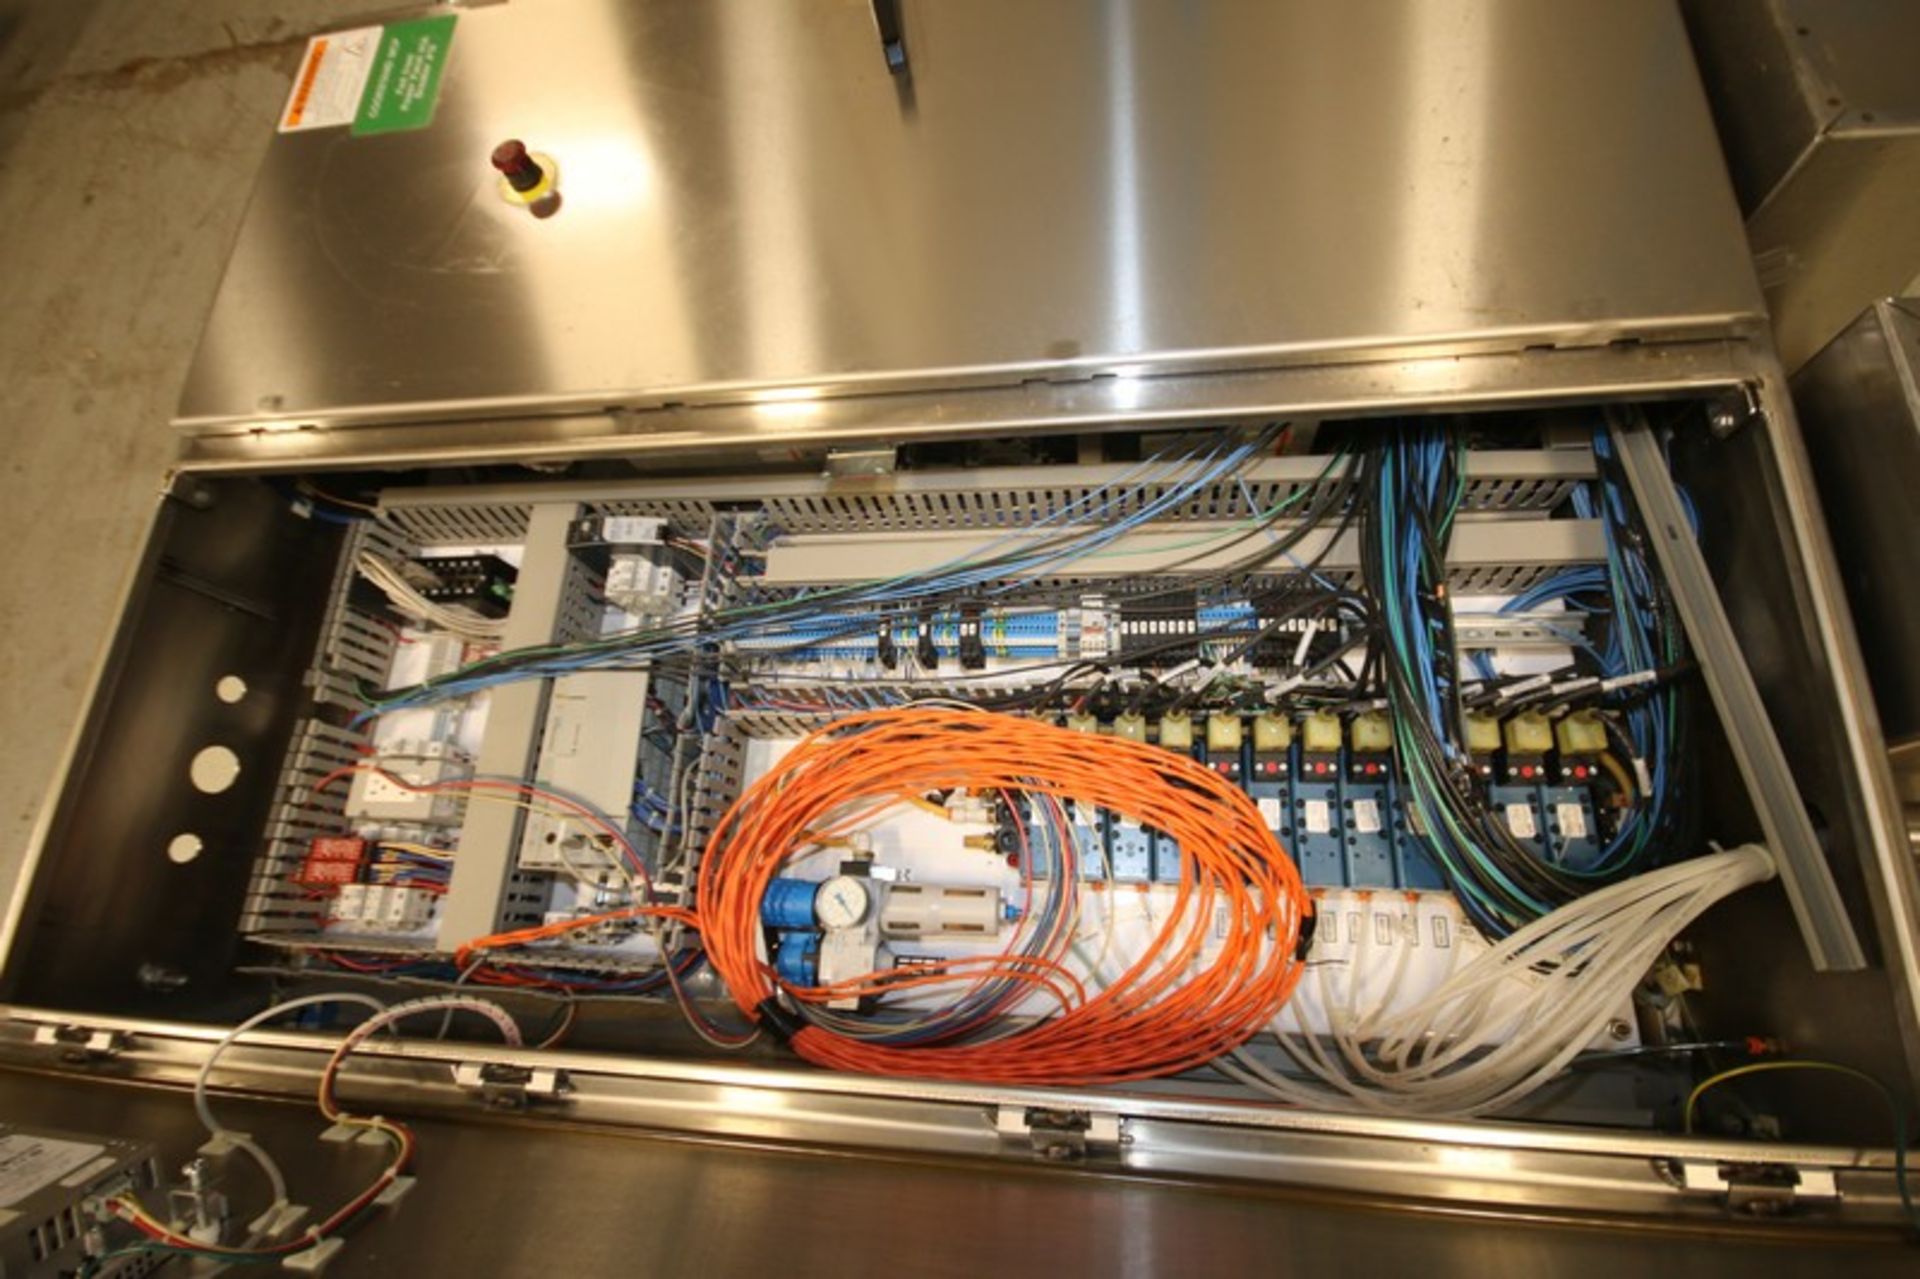 Panel Master 5' H x 4' W x 12" D, 2 Door, S/S Production Control Panel, with Allen Bradley Compact - Image 3 of 7